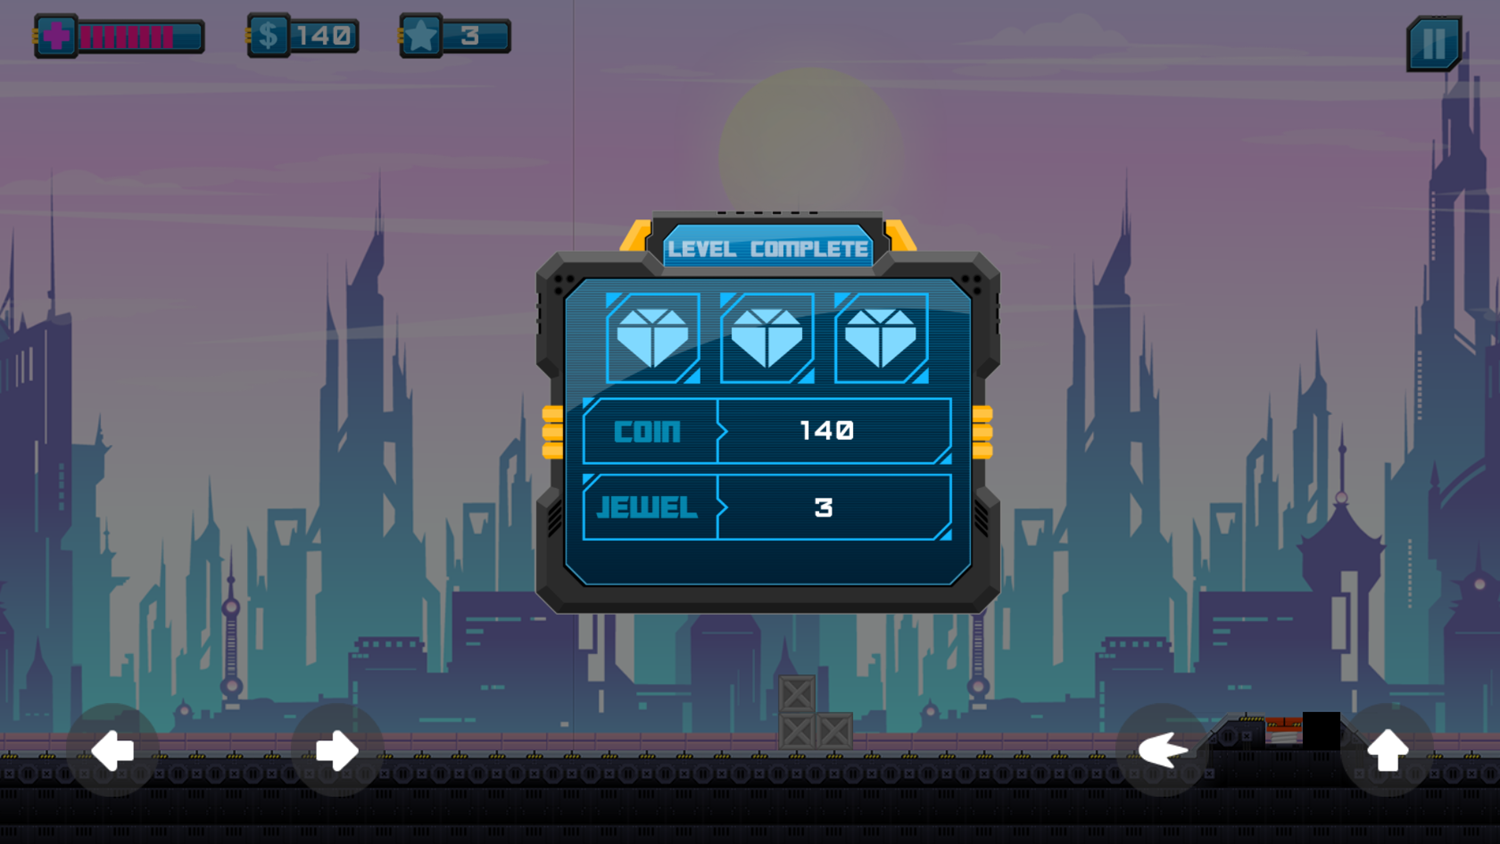 Cyber Knight Slashman Game Level Complete Screenshot.